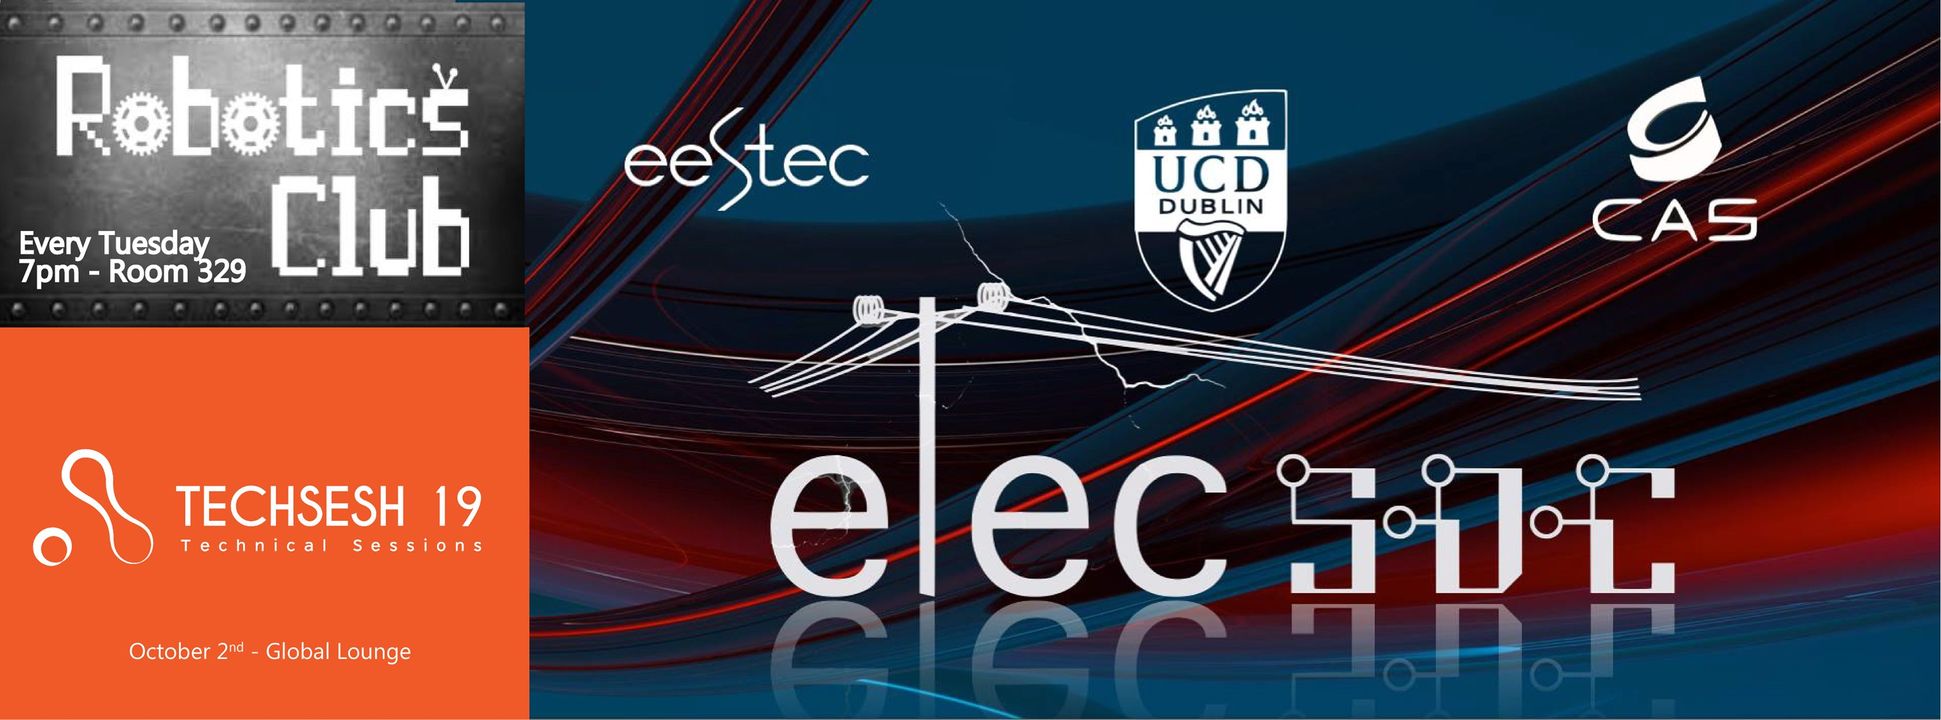 Banner for UCD ElecSoc